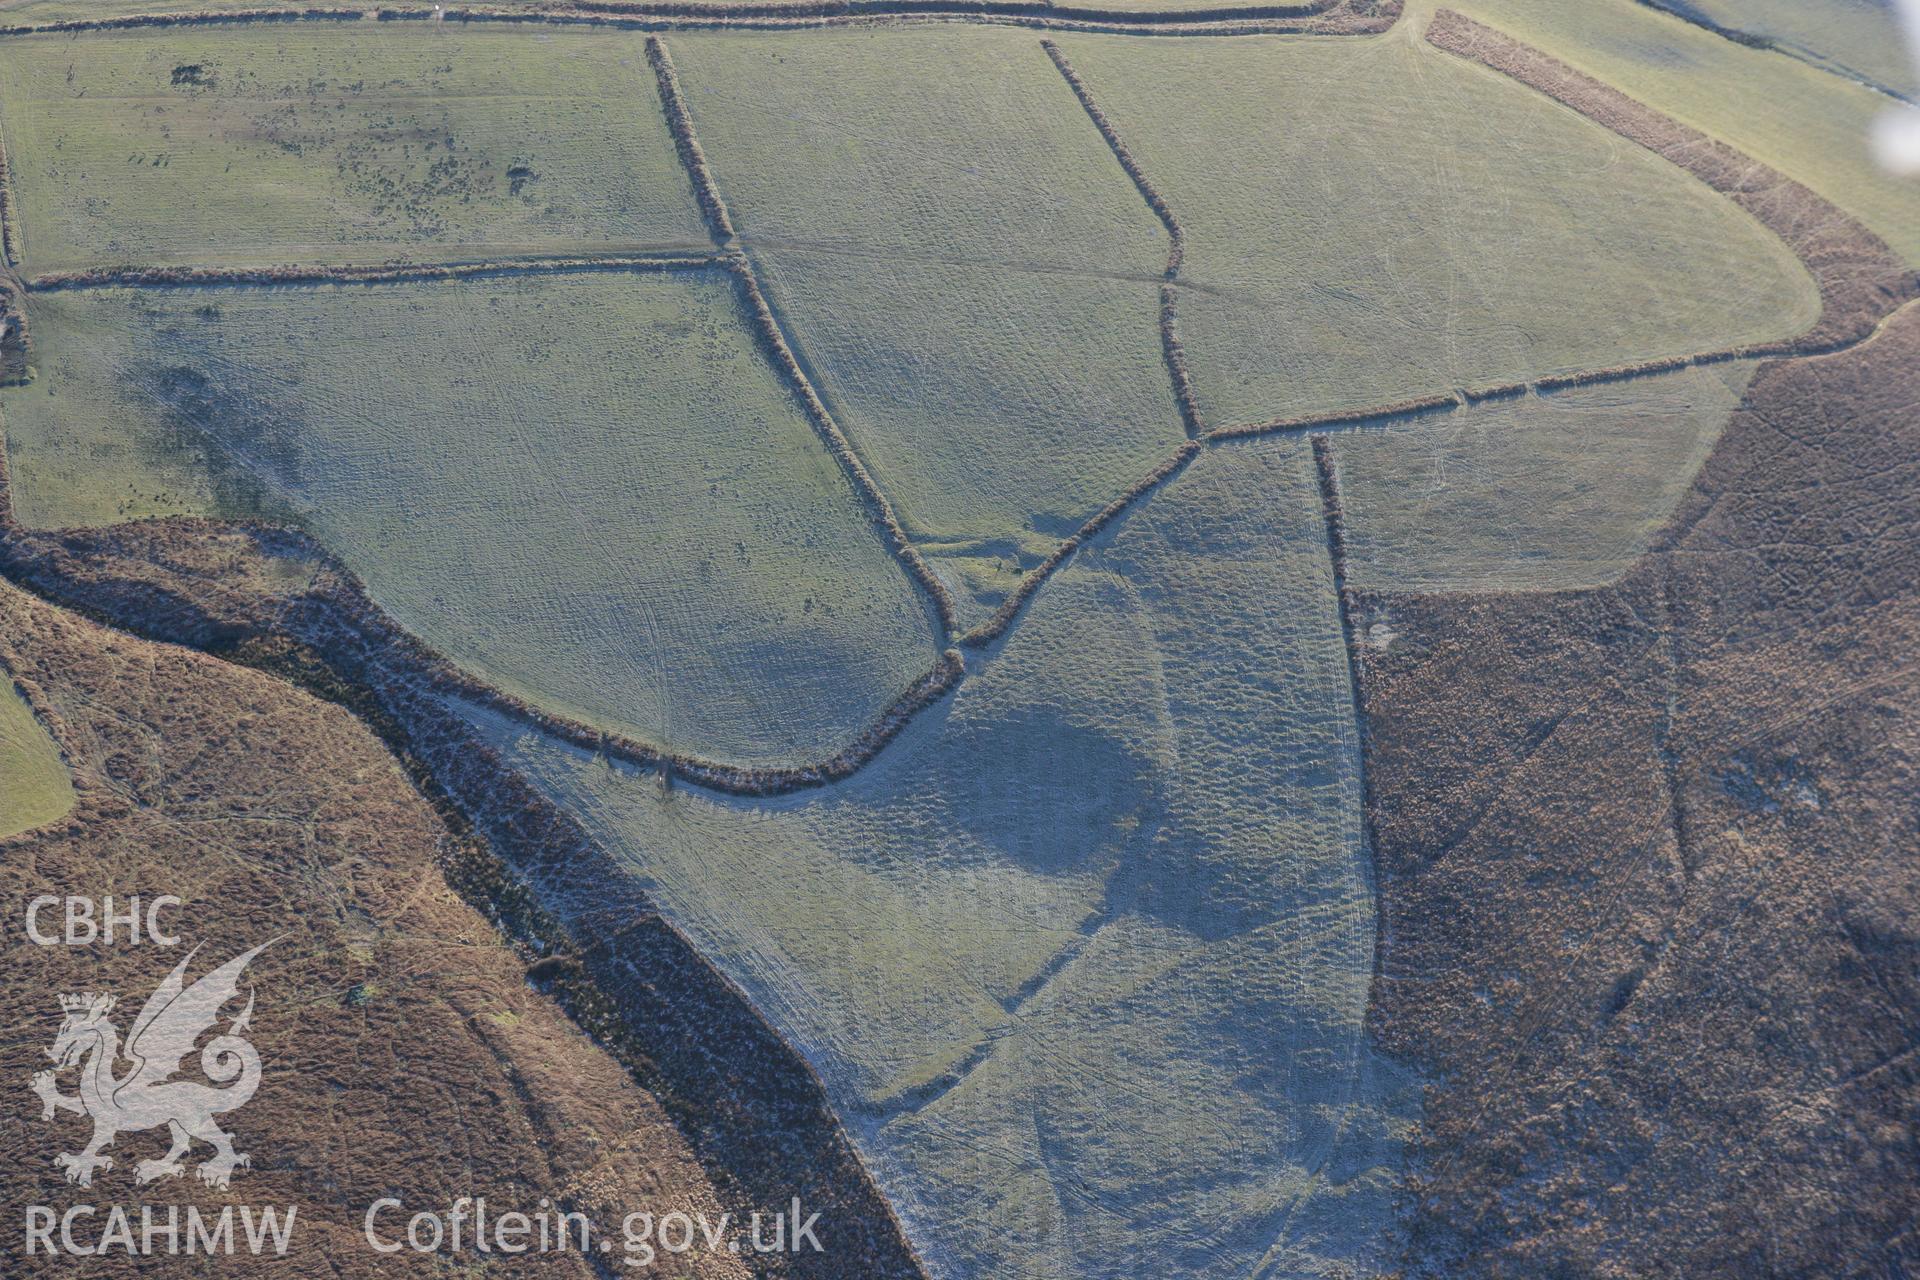 RCAHMW colour oblique photograph of Margam deserted rural settlement earthworks. Taken by Toby Driver on 08/12/2010.